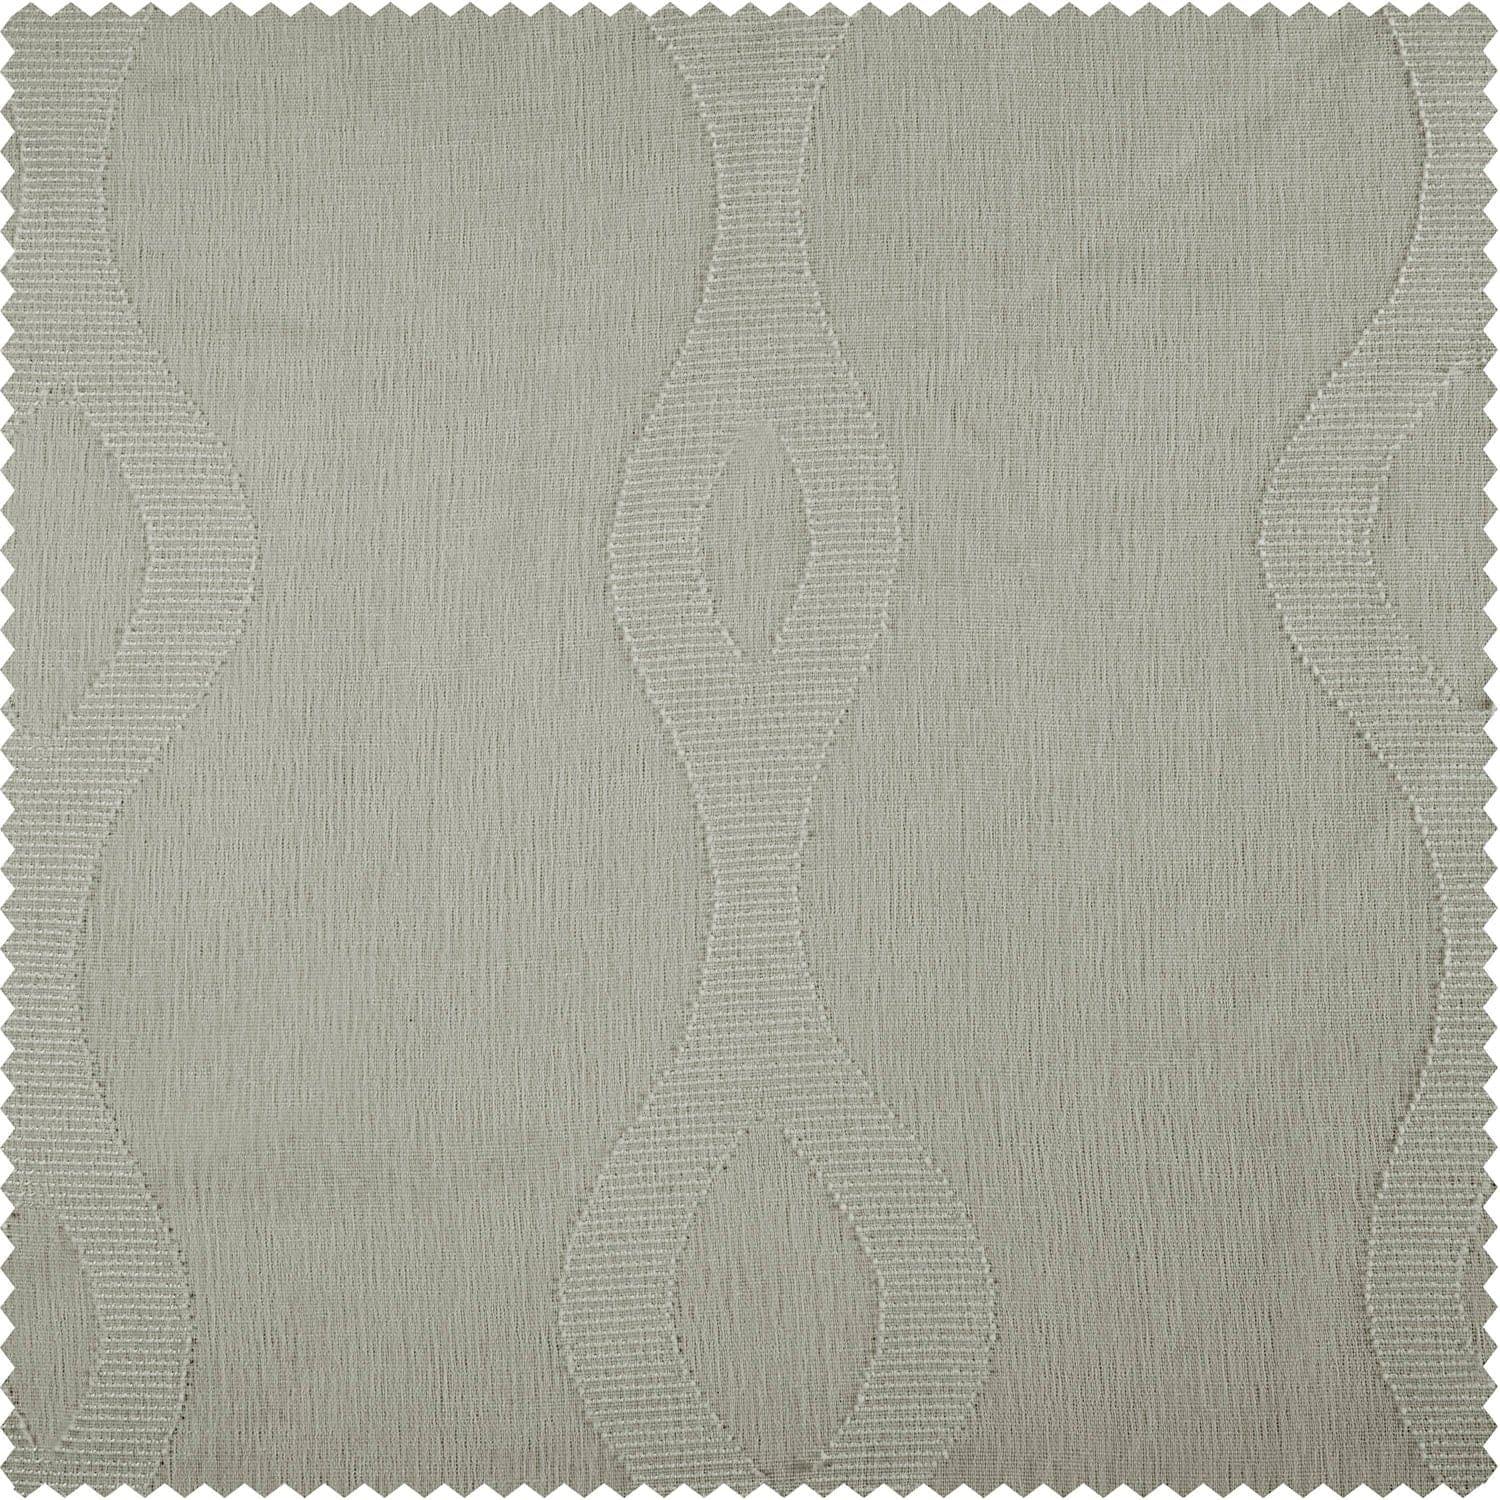 Vega White Striped Patterned Faux Linen Sheer Curtain